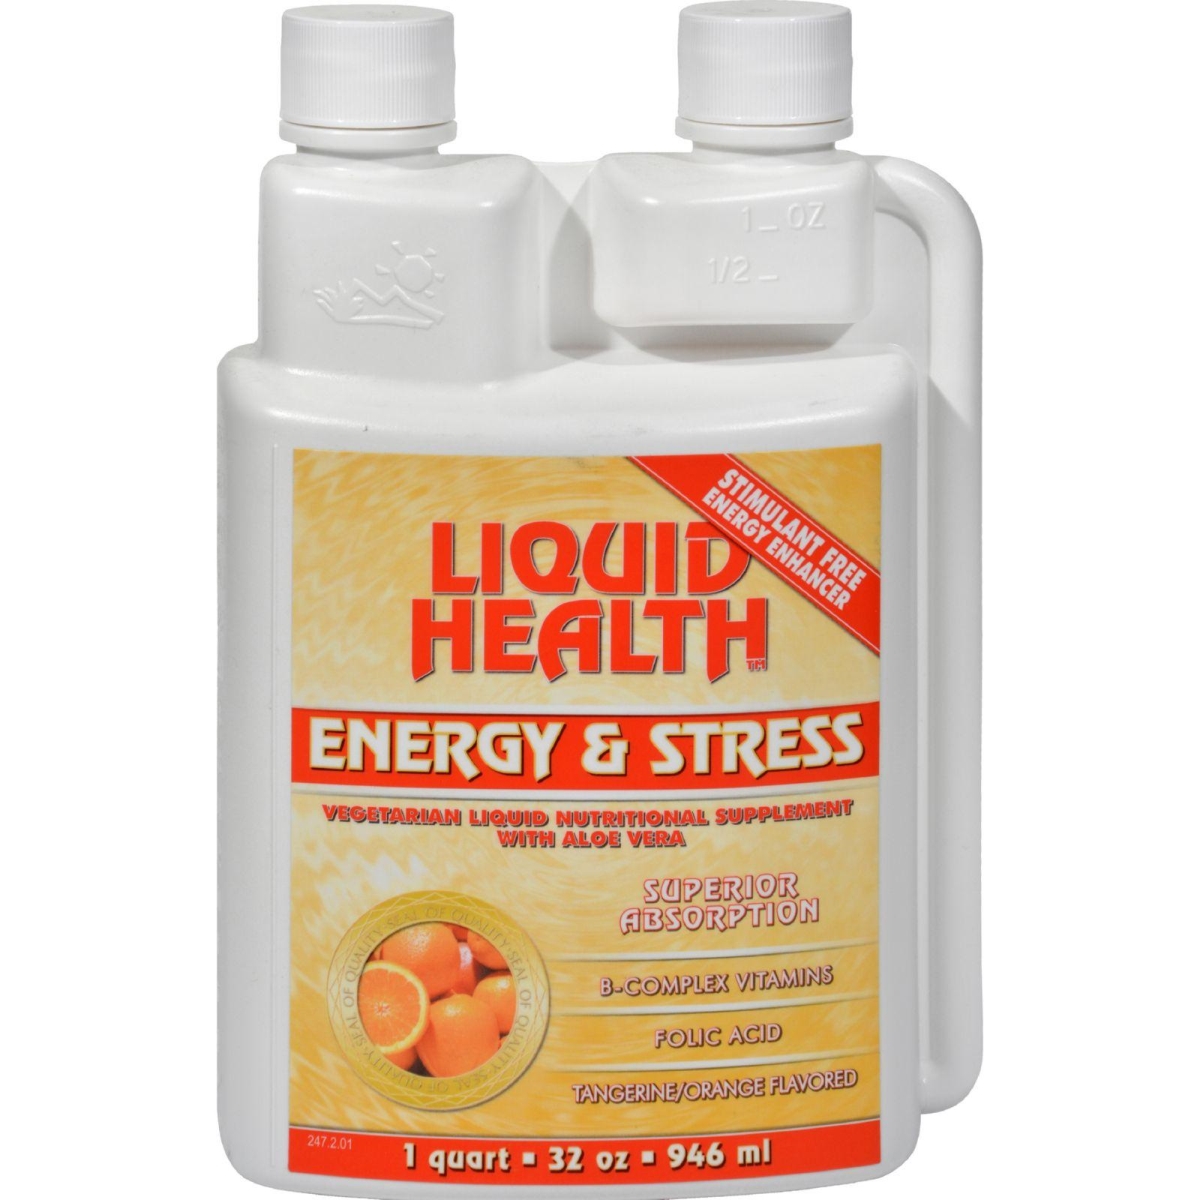 Picture of Liquid Health Products HG0421578 32 fl oz Liquid Health Energy & Stress Tangerine Orange